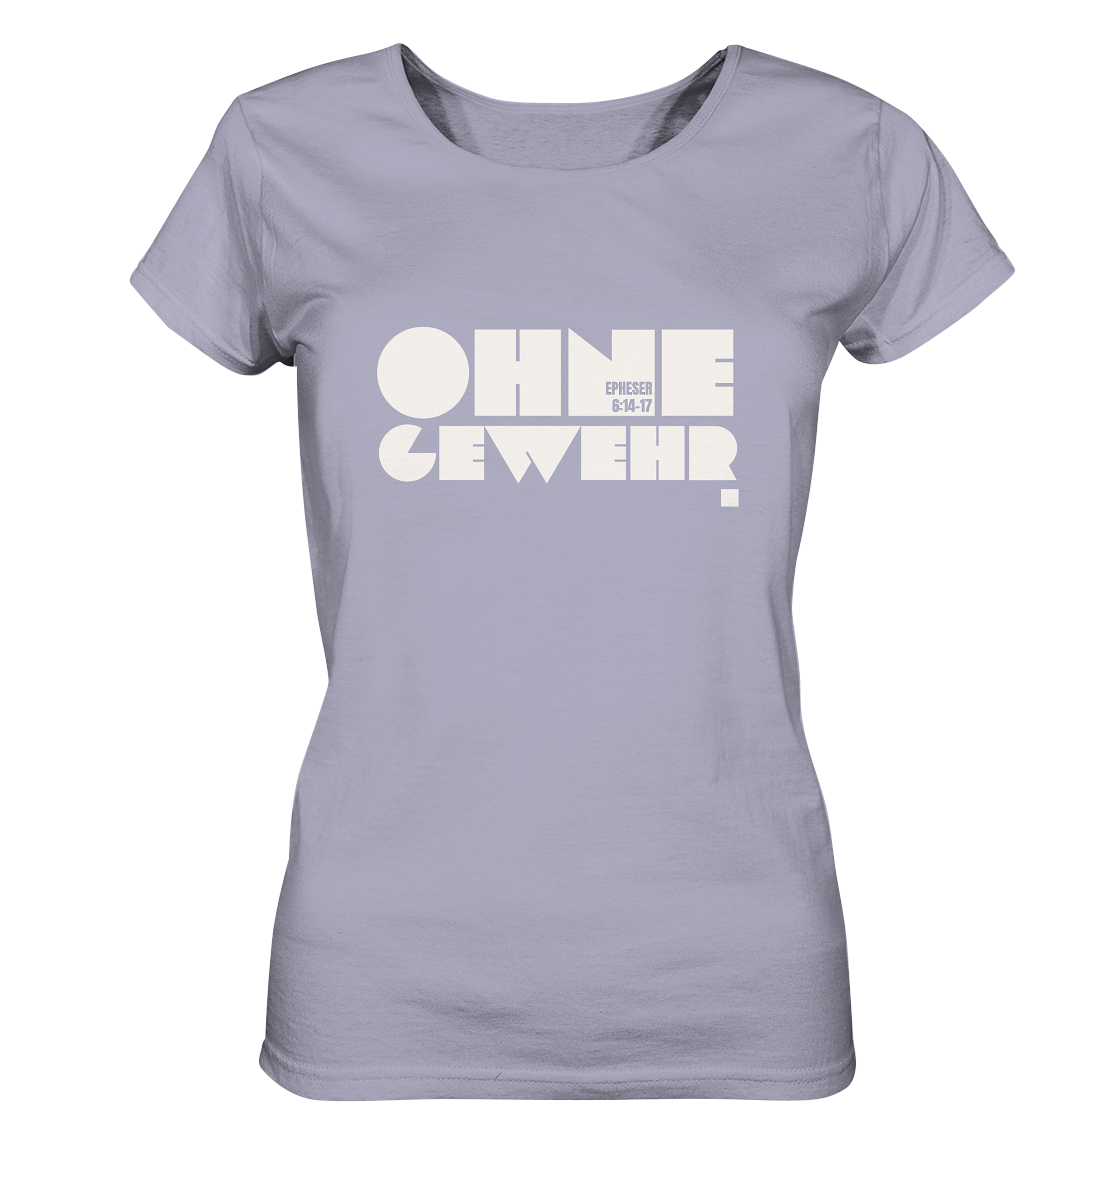 Ohne Gewehr - Ladies Organic Shirt